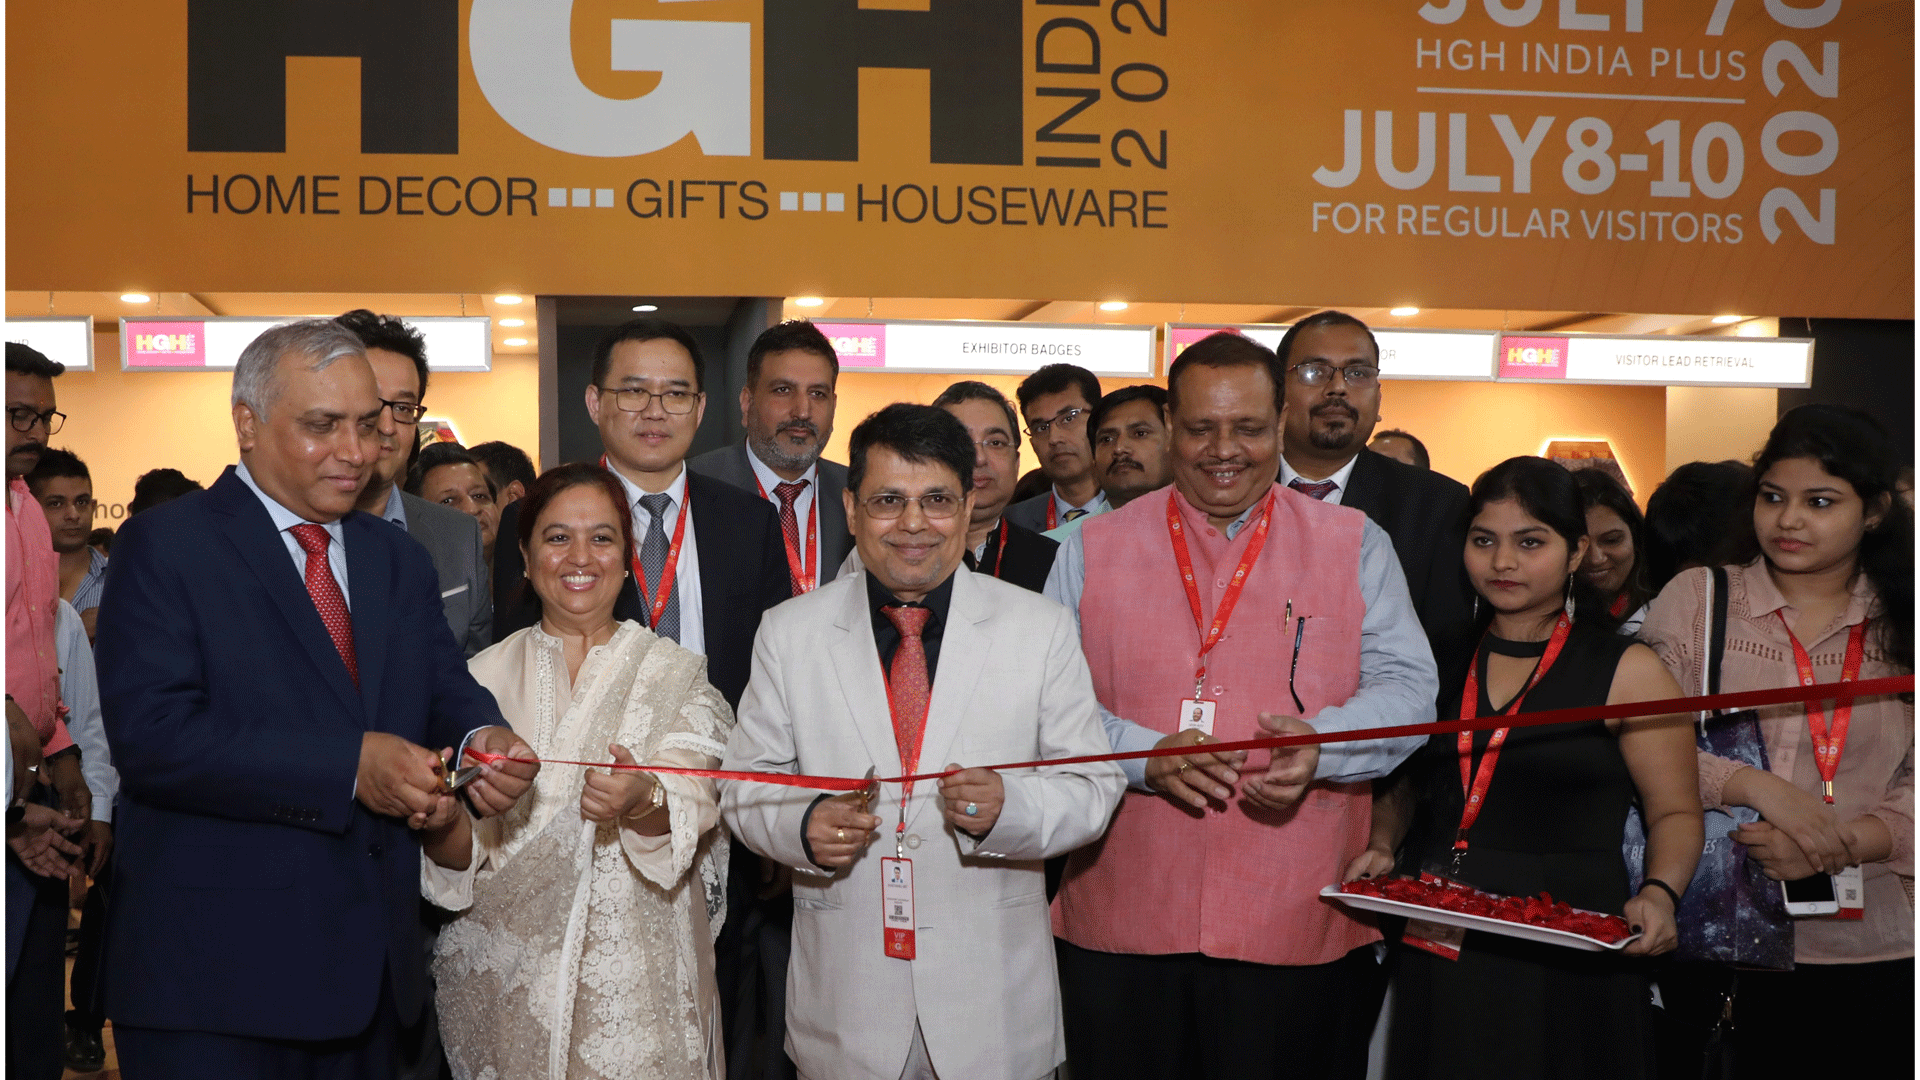 hgh india 2019 was inaugurated by shri shantamanu, development commissioner, handicrafts - architect and interiors india